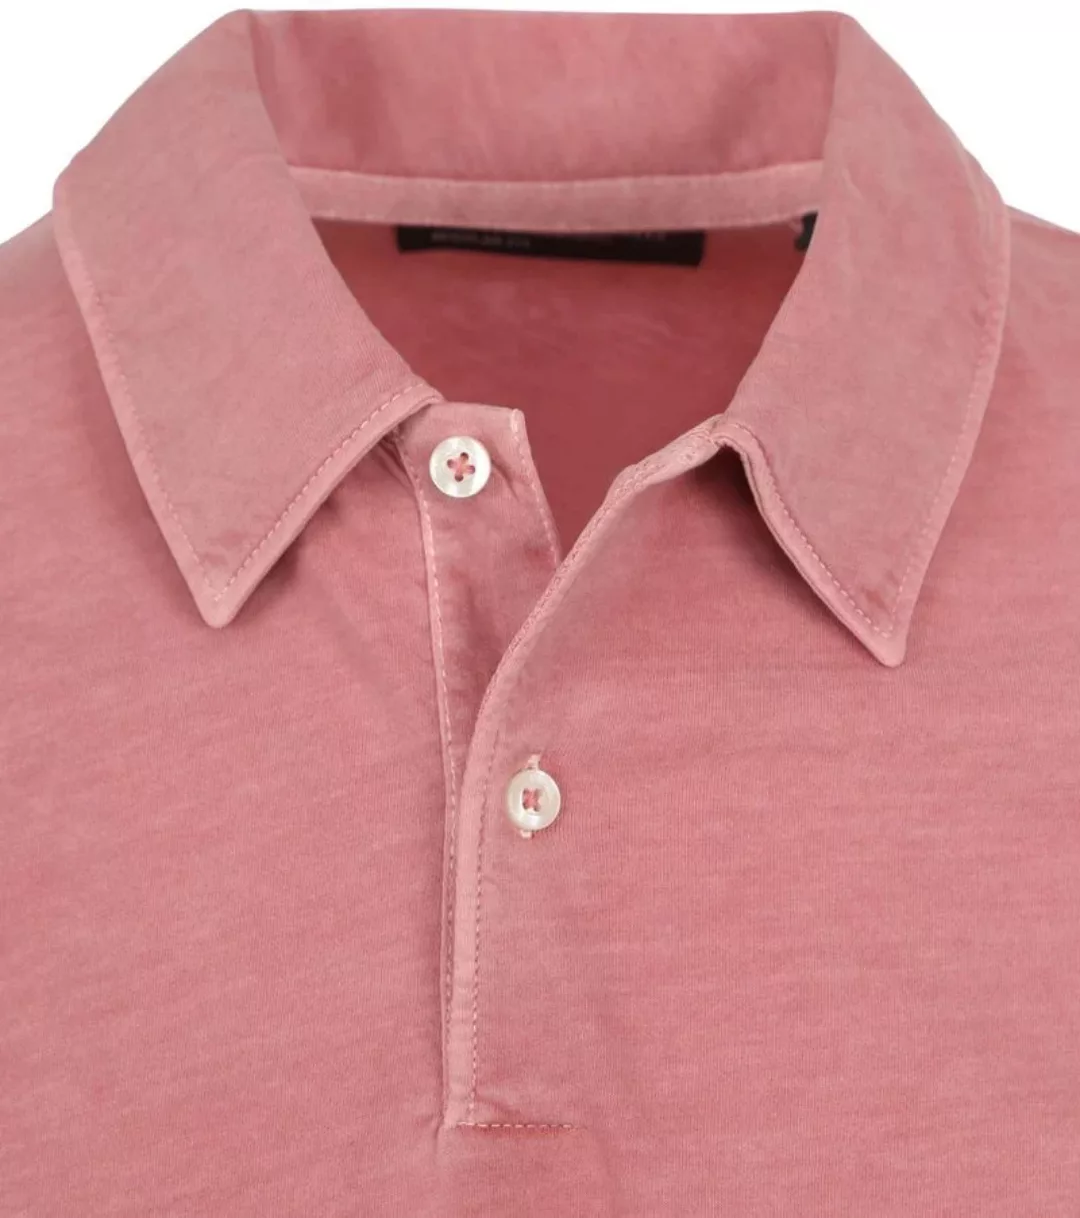 Marc O'Polo Poloshirt Terry Cloth Rosa - Größe M günstig online kaufen